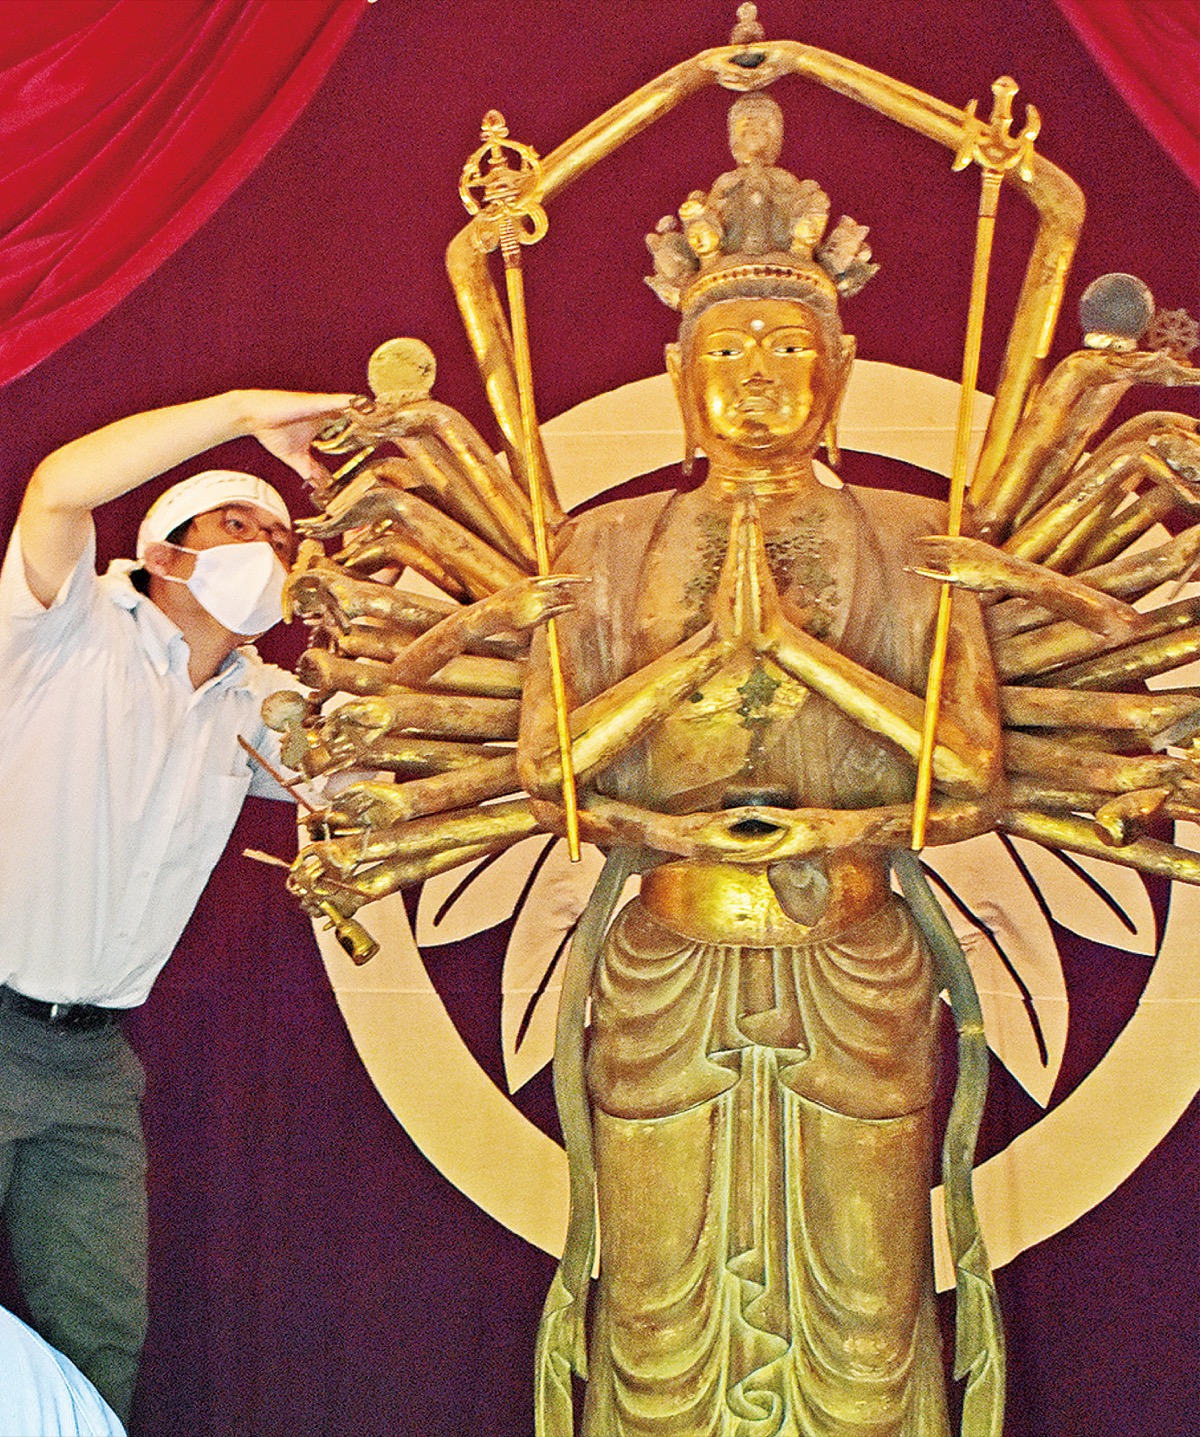 龍峰寺千手観音菩薩立像 国重文の仏像を輸送 県立歴史博物館で展示へ